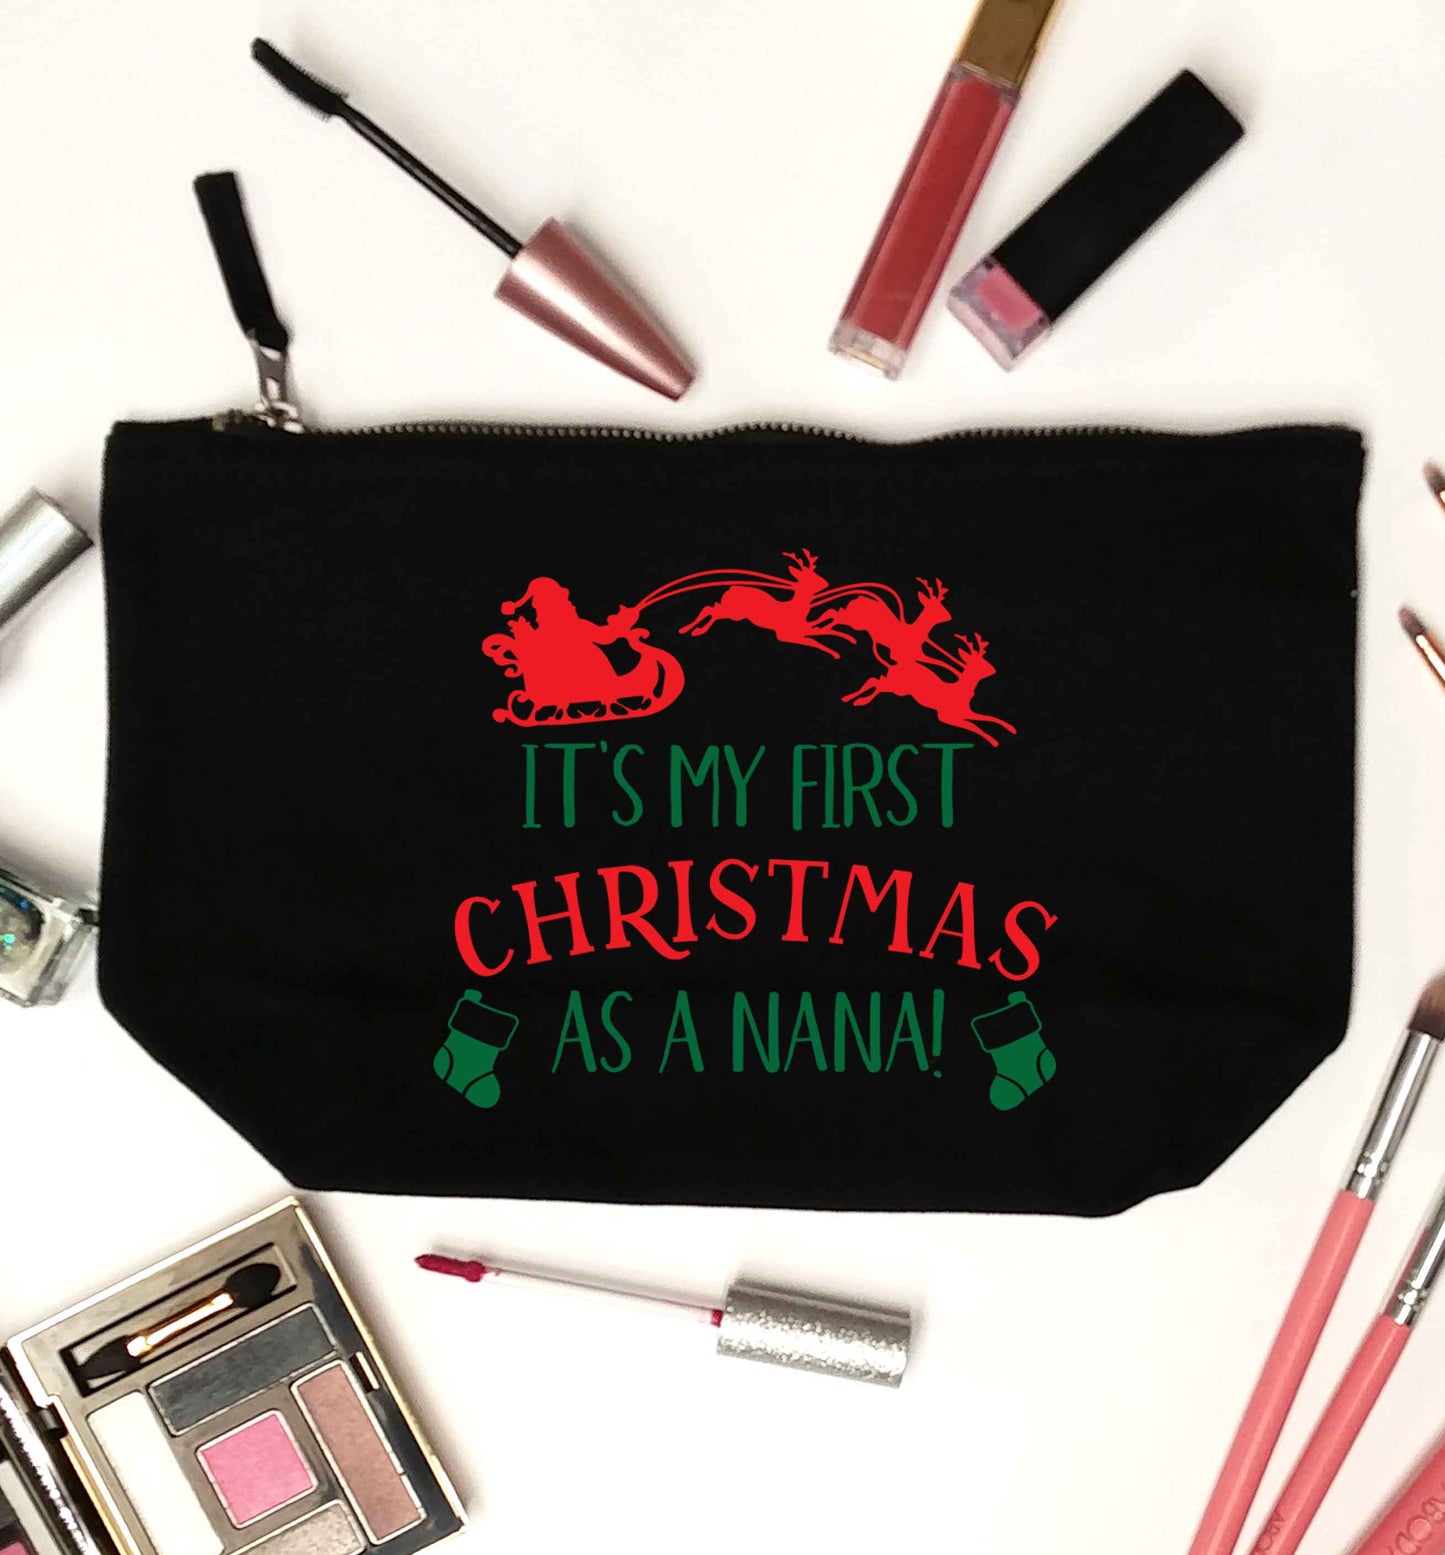 It's my first Christmas as a nana black makeup bag